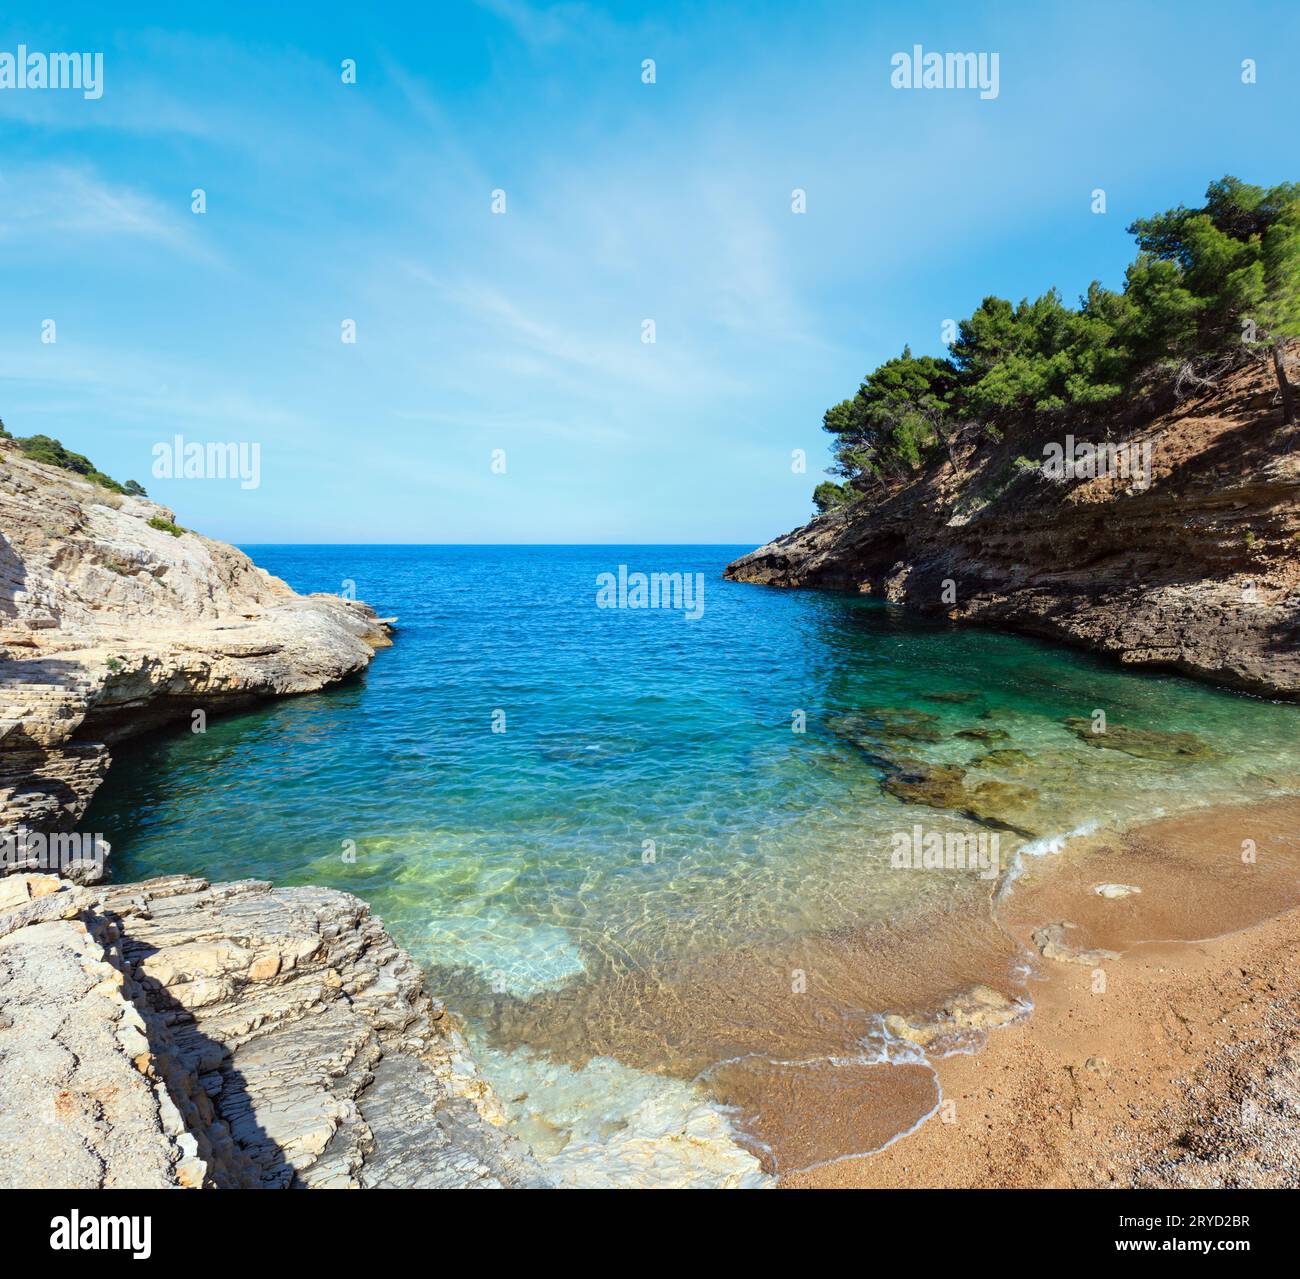 Sommer Baia della Pergola kleinen ruhigen ruhigen Strand, Halbinsel Gargano in Apulien, Italien Stockfoto